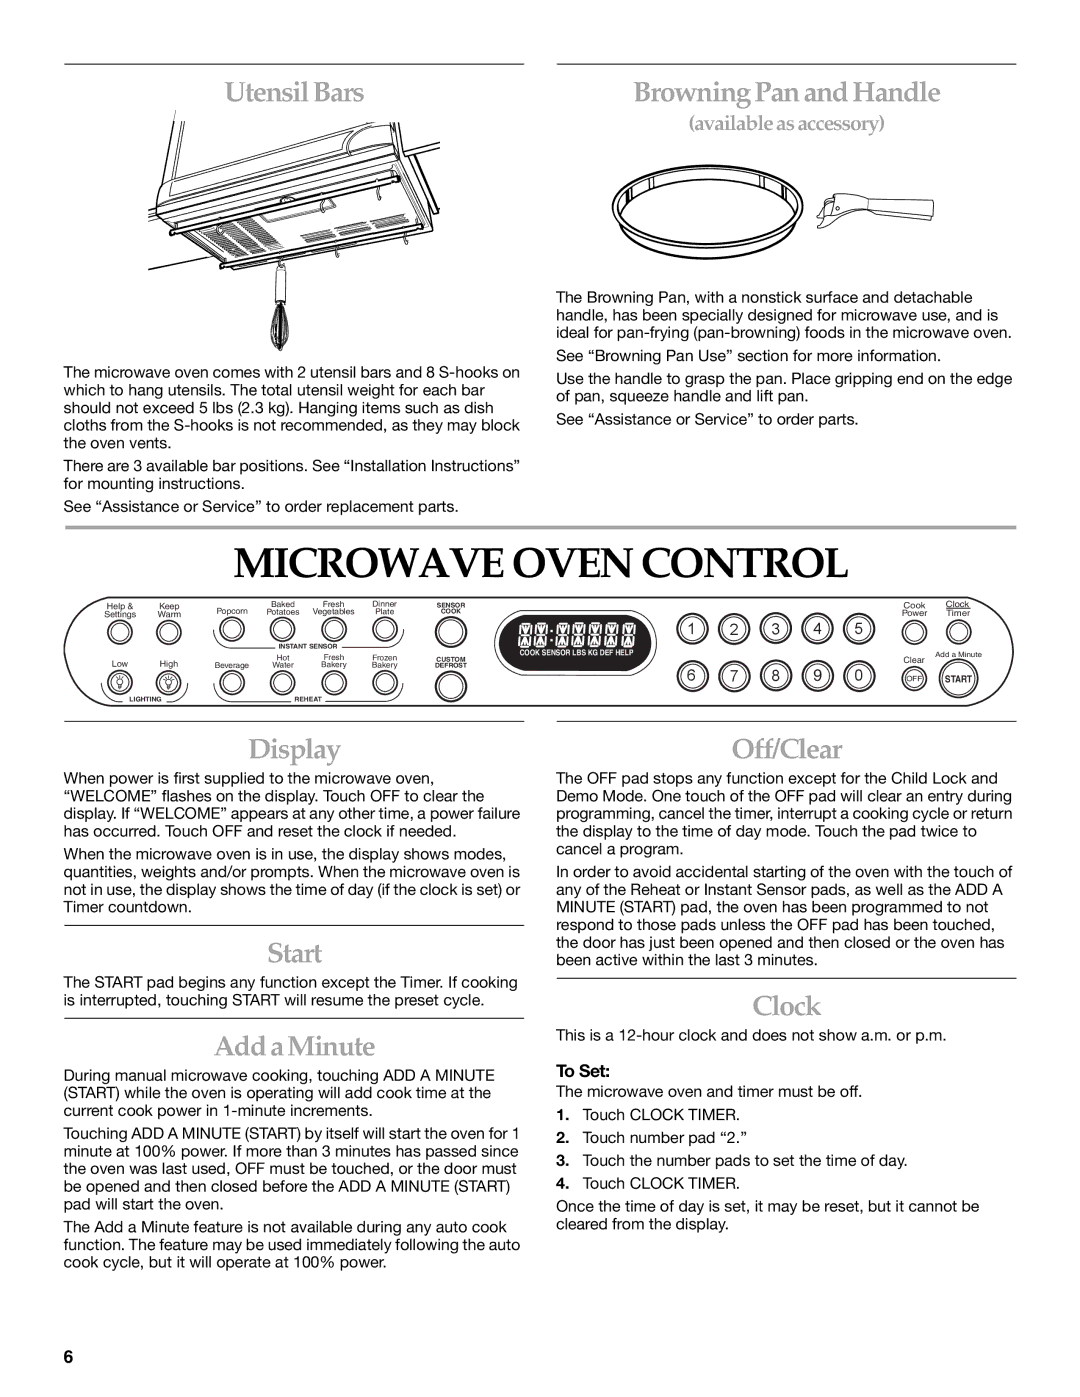 KitchenAid KOMS155M manual Microwave Oven Control 